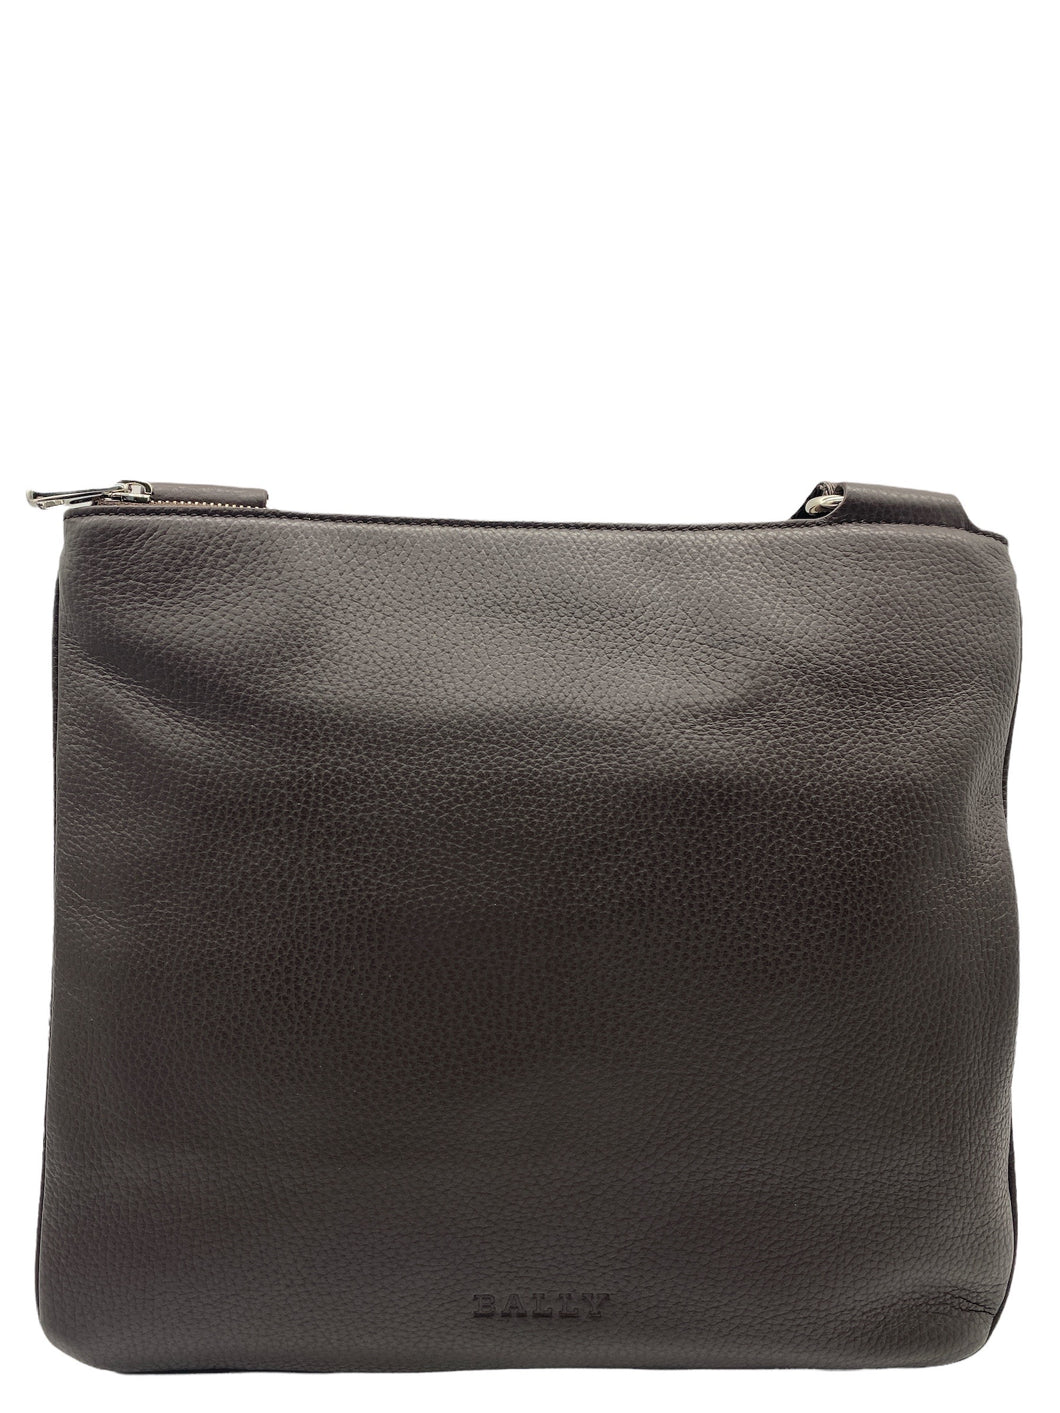 NEW Bally Mizzi Men's 6216301 Small Coffee Leather Cross Body Bag MSRP $650